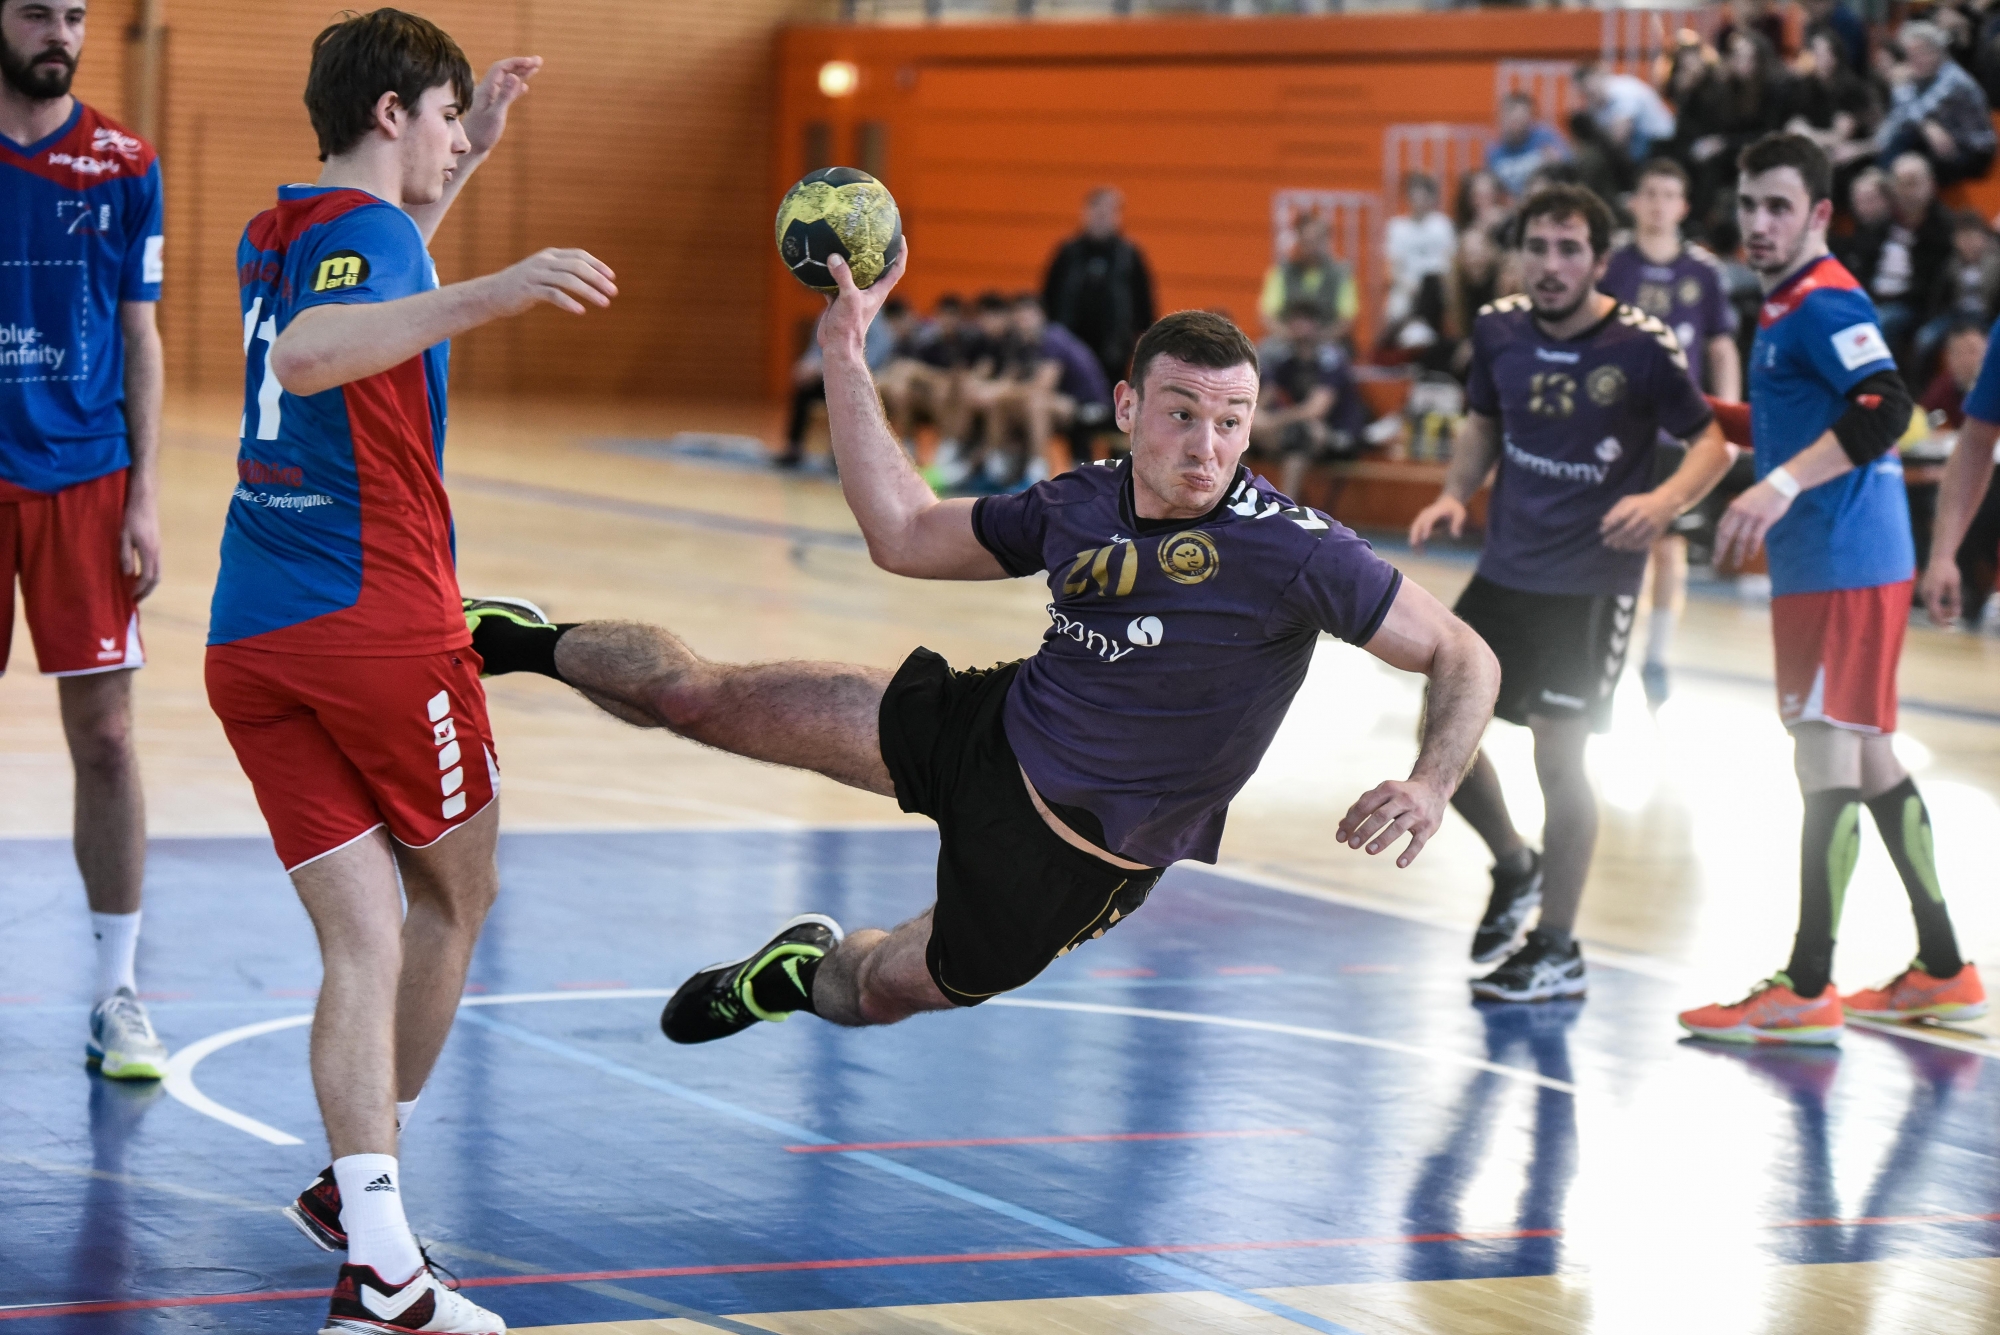 Nyon, dimanche 19 mars 2017, Rocher, Handball, 2ème ligue, HBC Nyon vs TCGG, Daniel Suardi, photos Cédric Sandoz